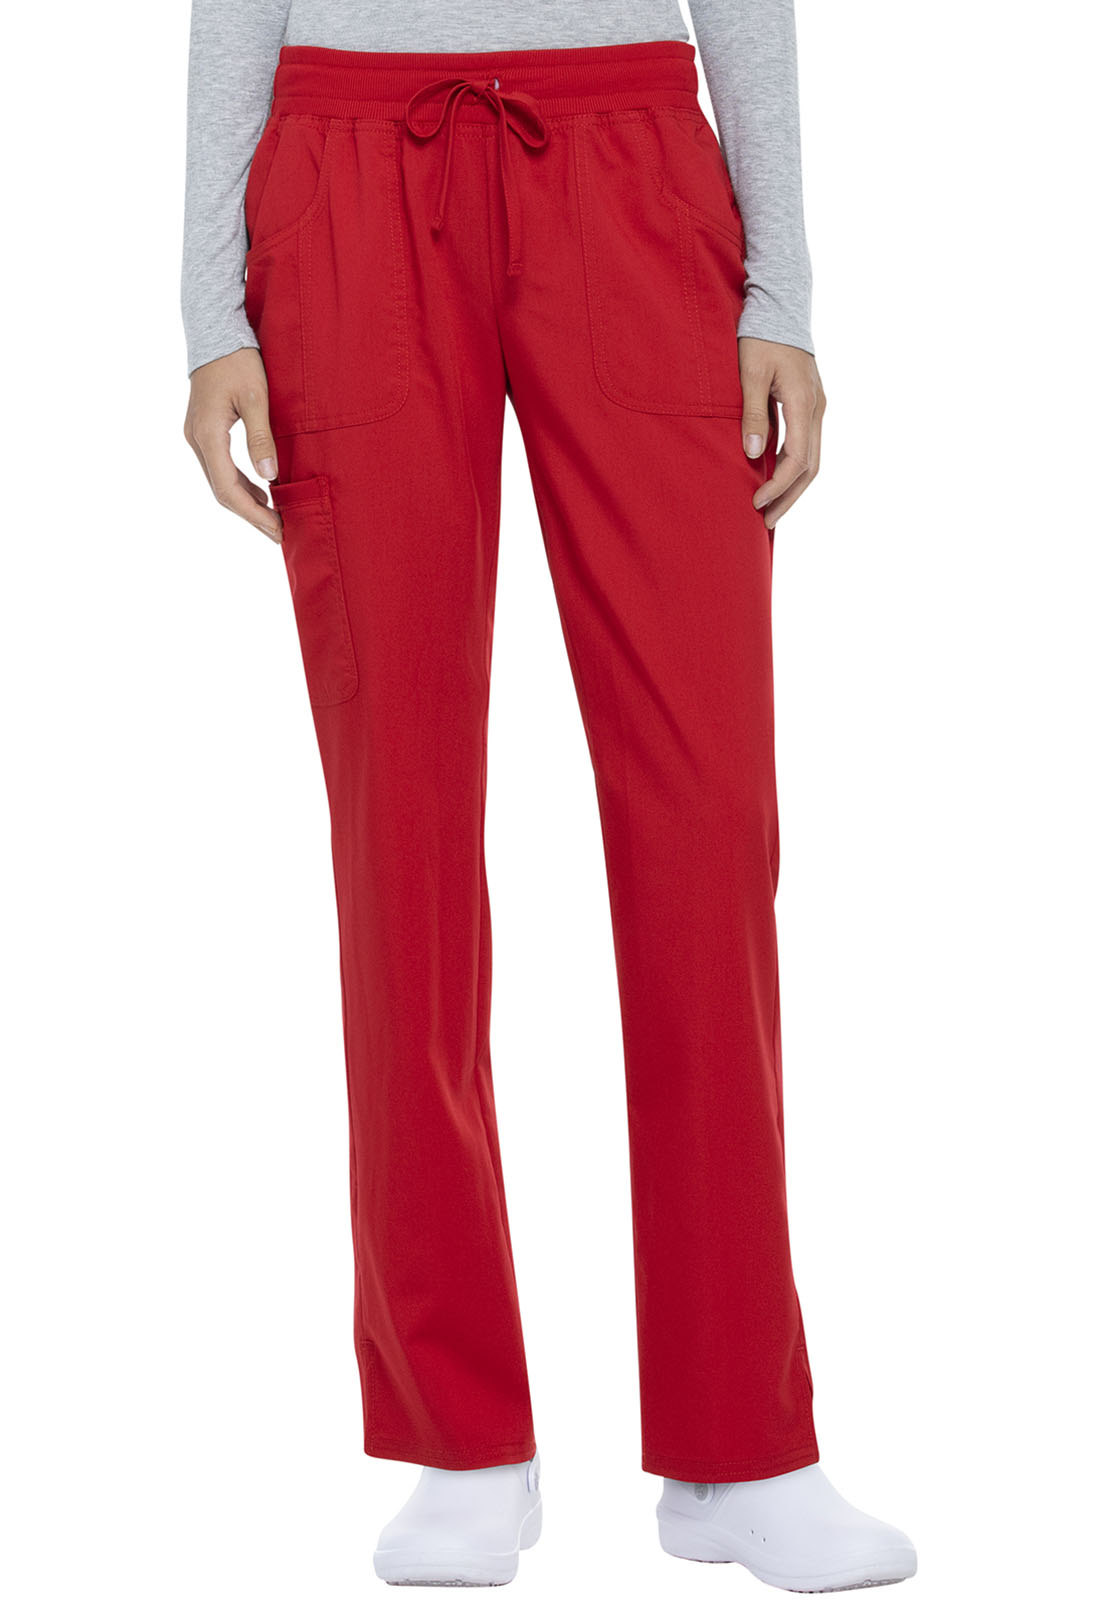 Walmart USA Premium Rayon Women's Drawstring Pant WM018-CLRE from Scrubstar